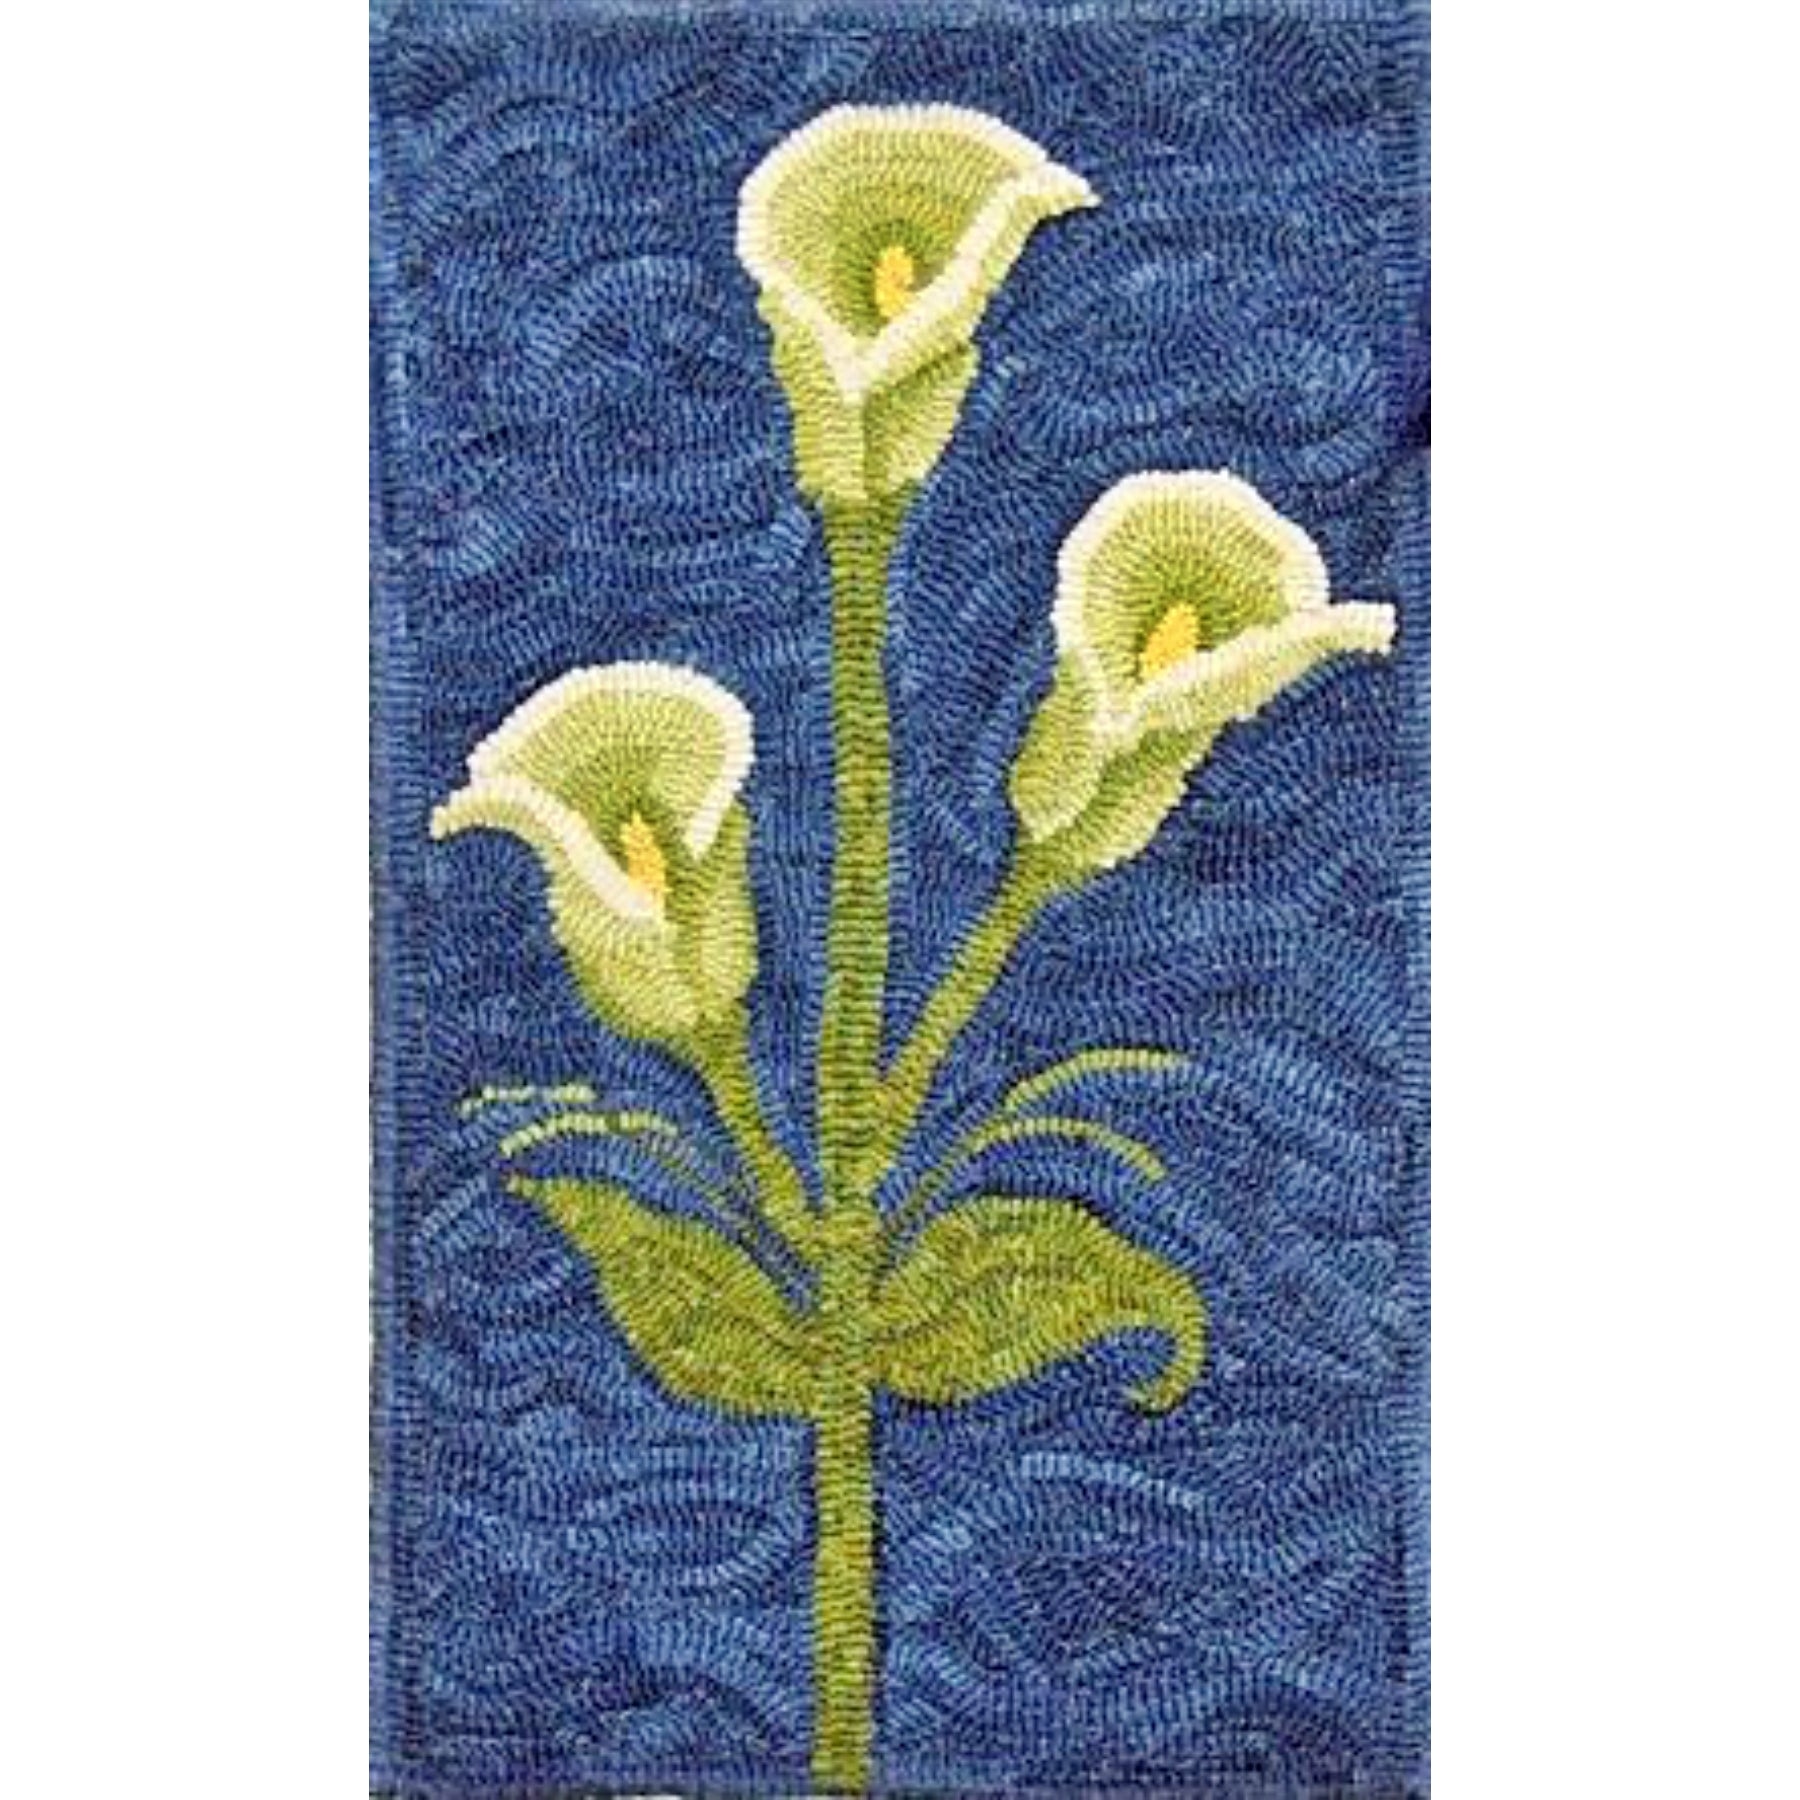 Calla Lilies, rug hooked by Karen Patrick